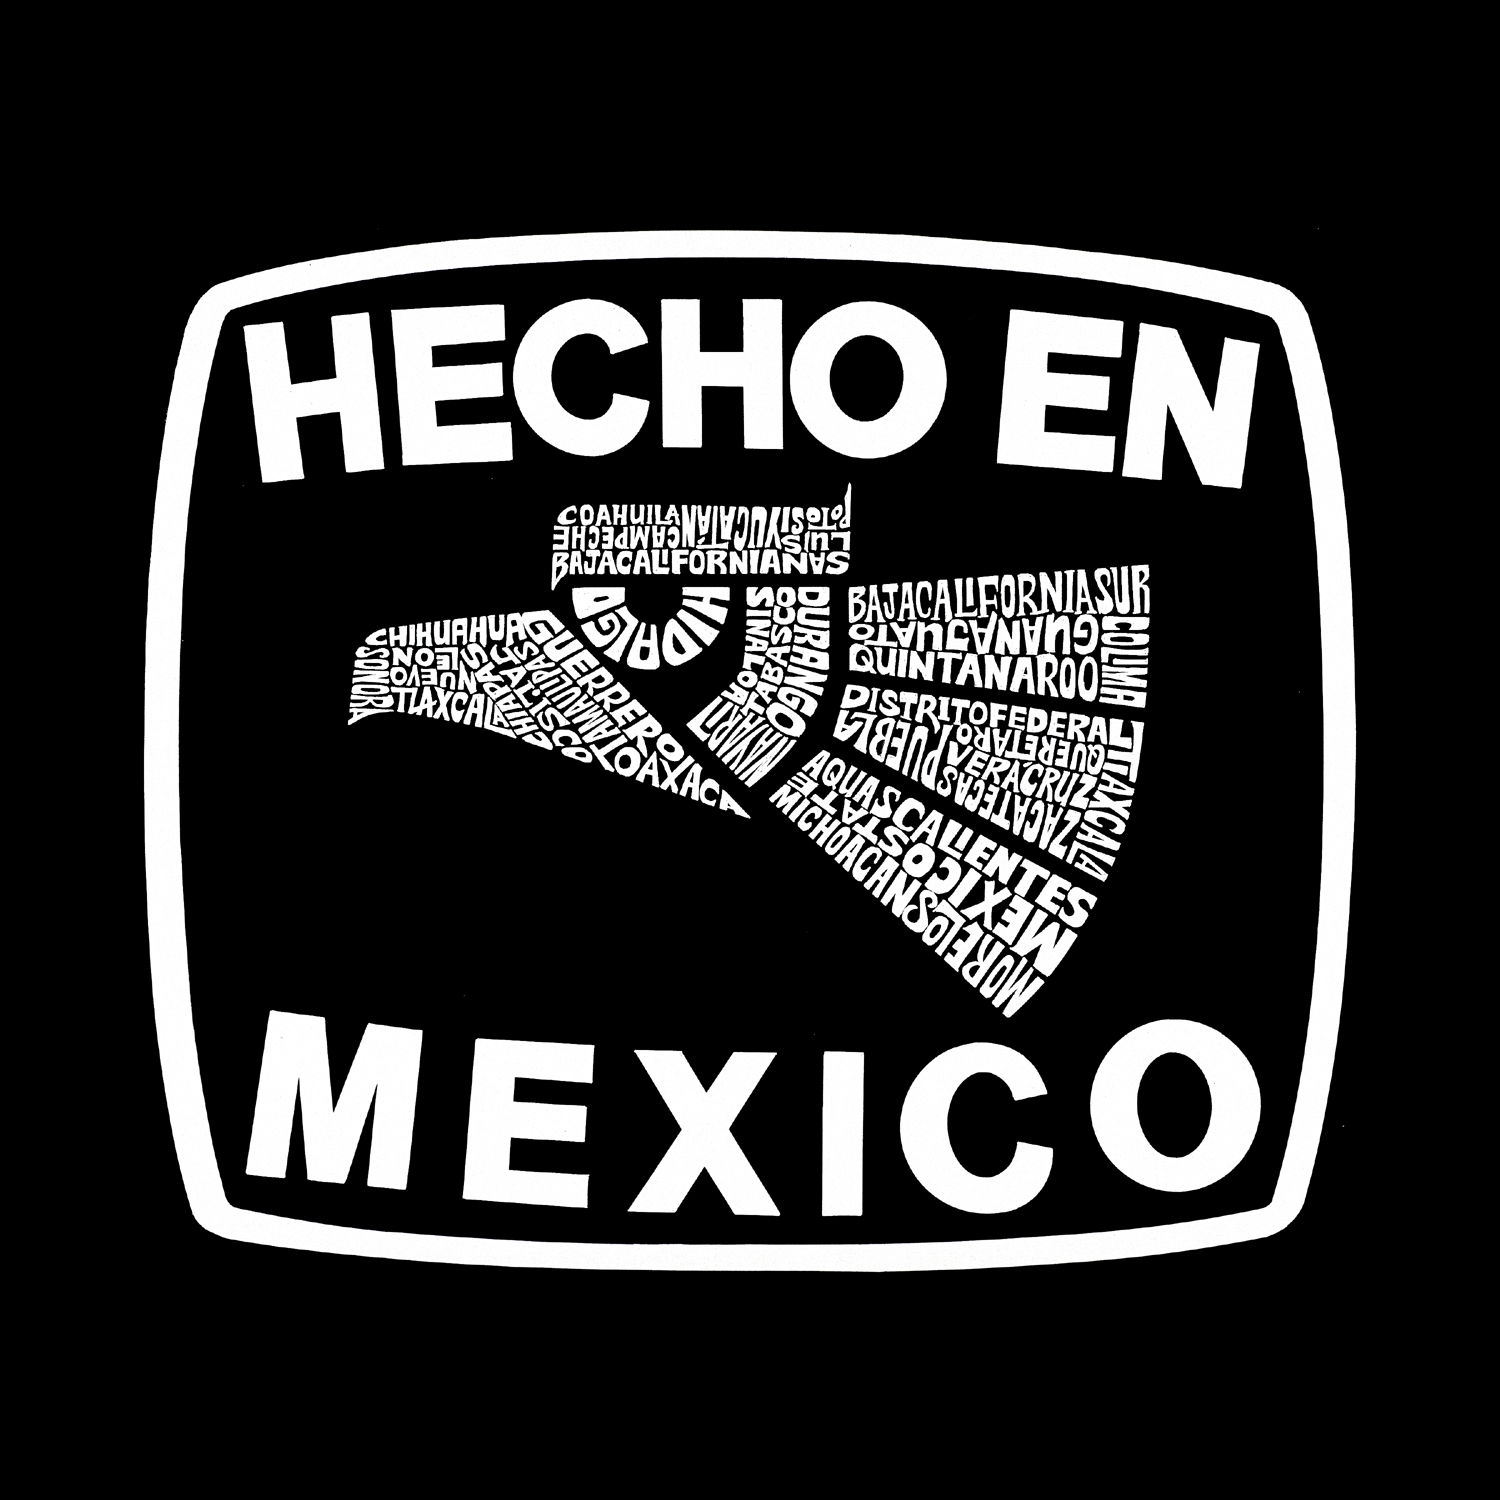 Los Angeles Pop Art Men's Sleeveless T-shirt - HECHO EN MEXICO